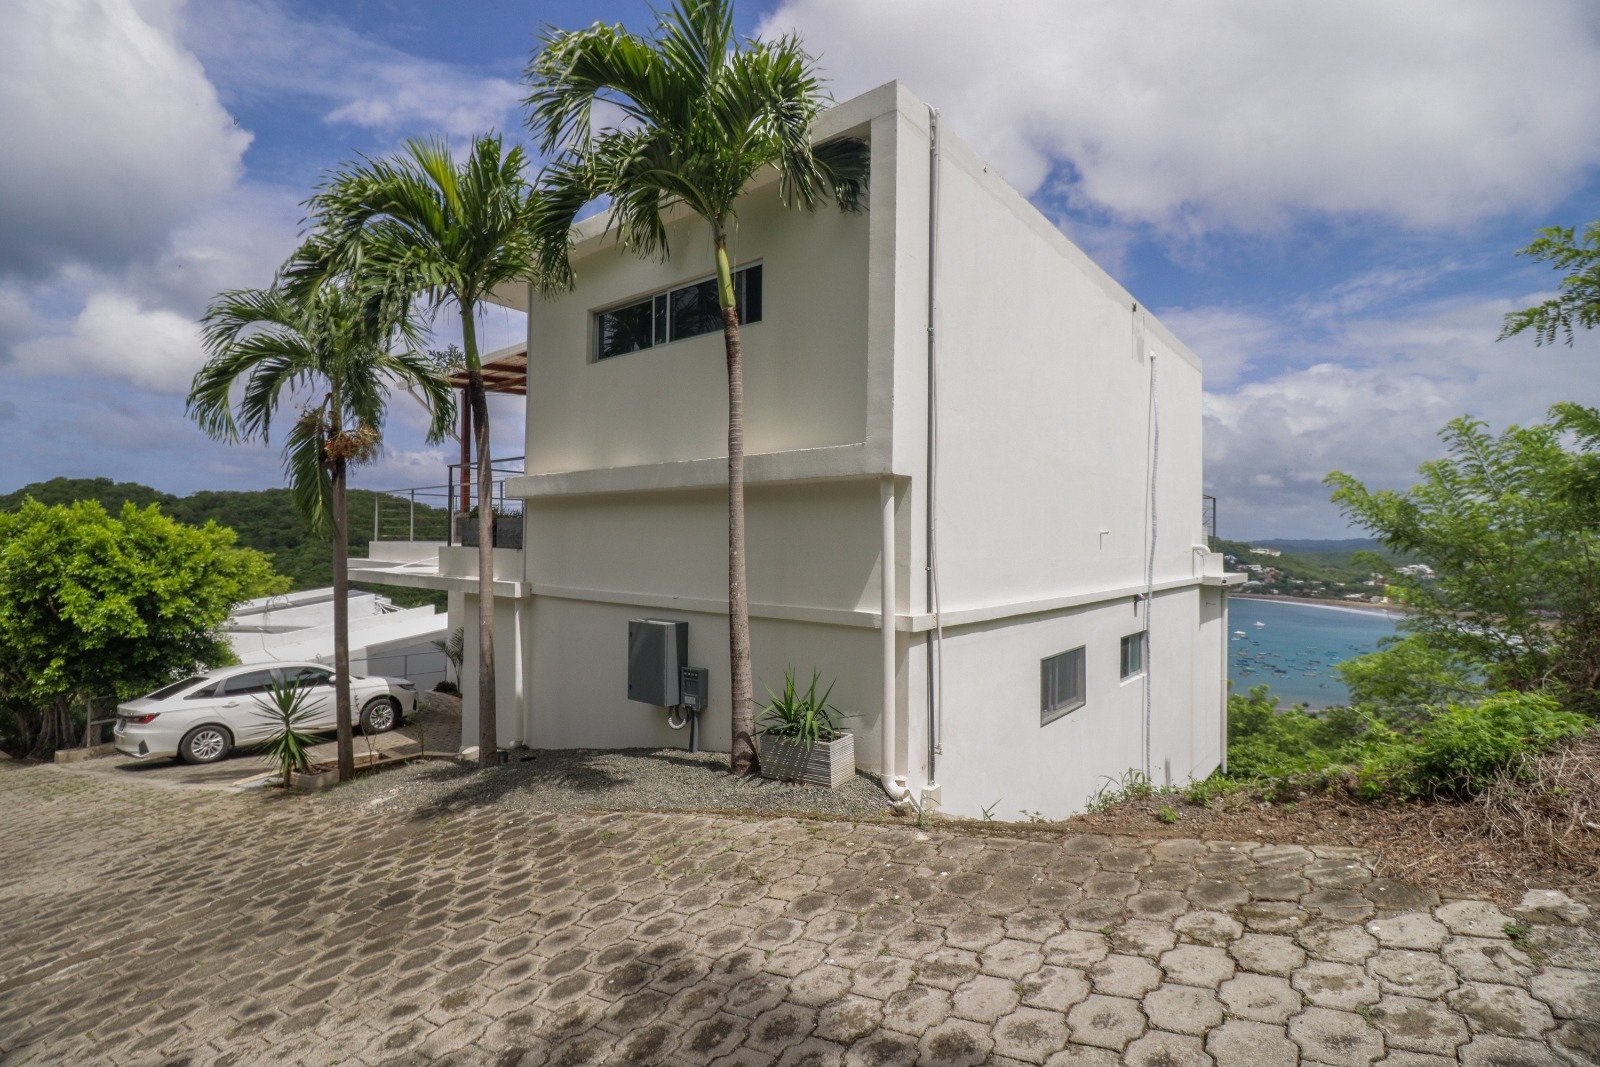 Two bedroom ocean view home for sale property real estate San Juan Del Sur (4).jpeg